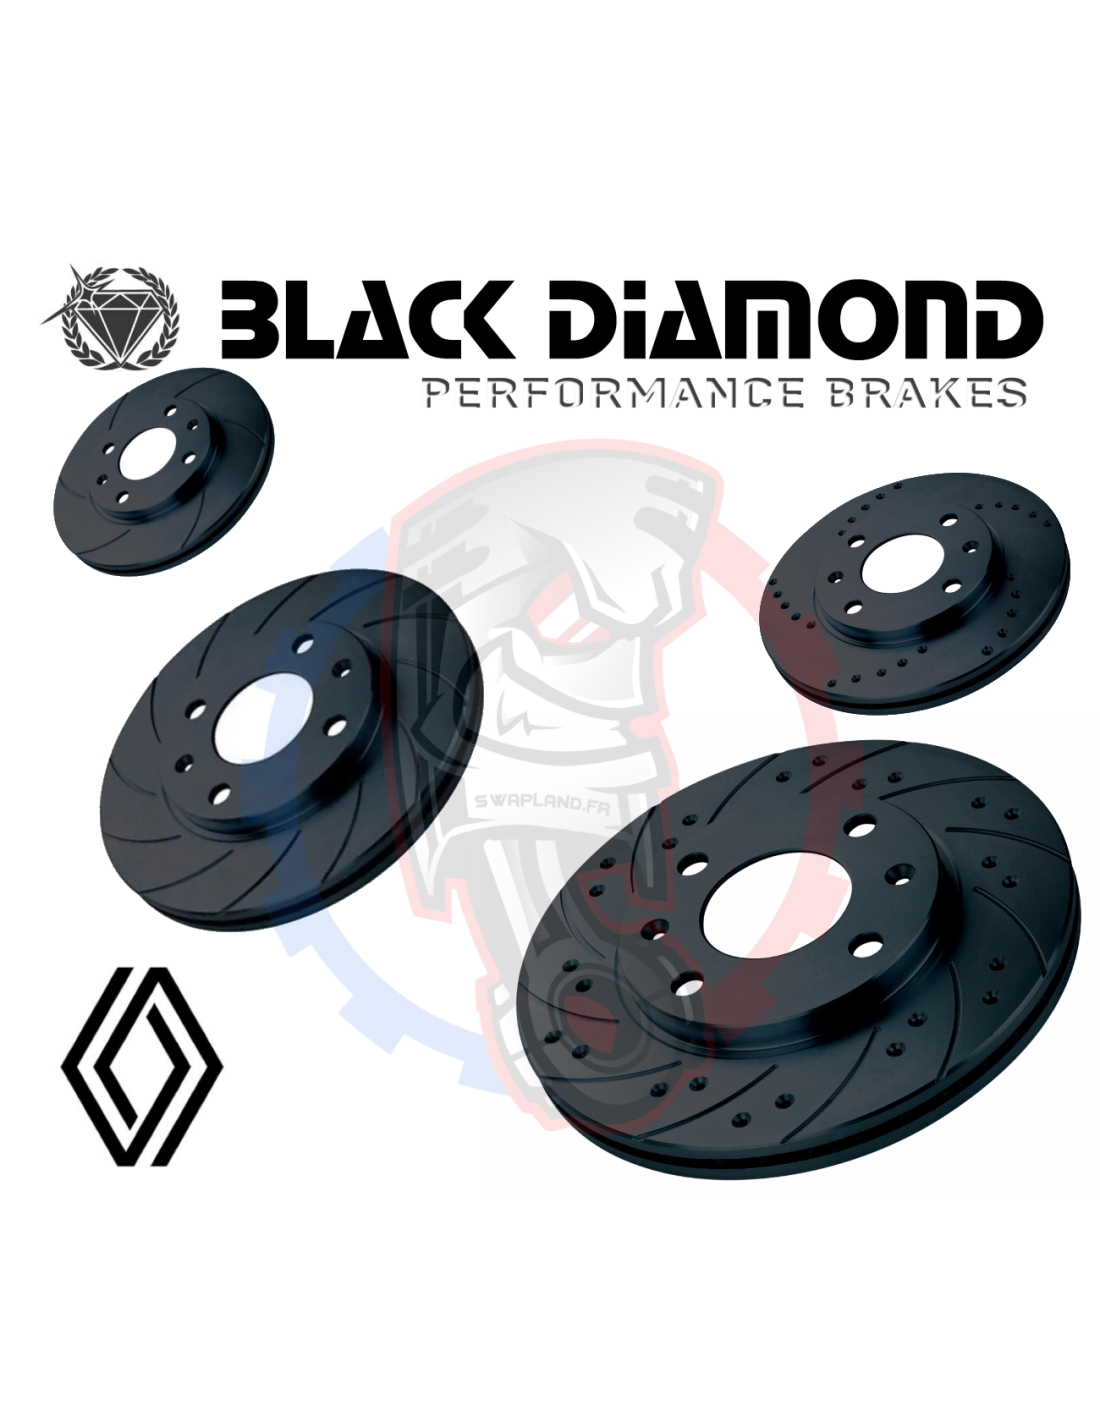 Disques de frein Black diamond pour RENAULT Twingo -SWAPLAND-